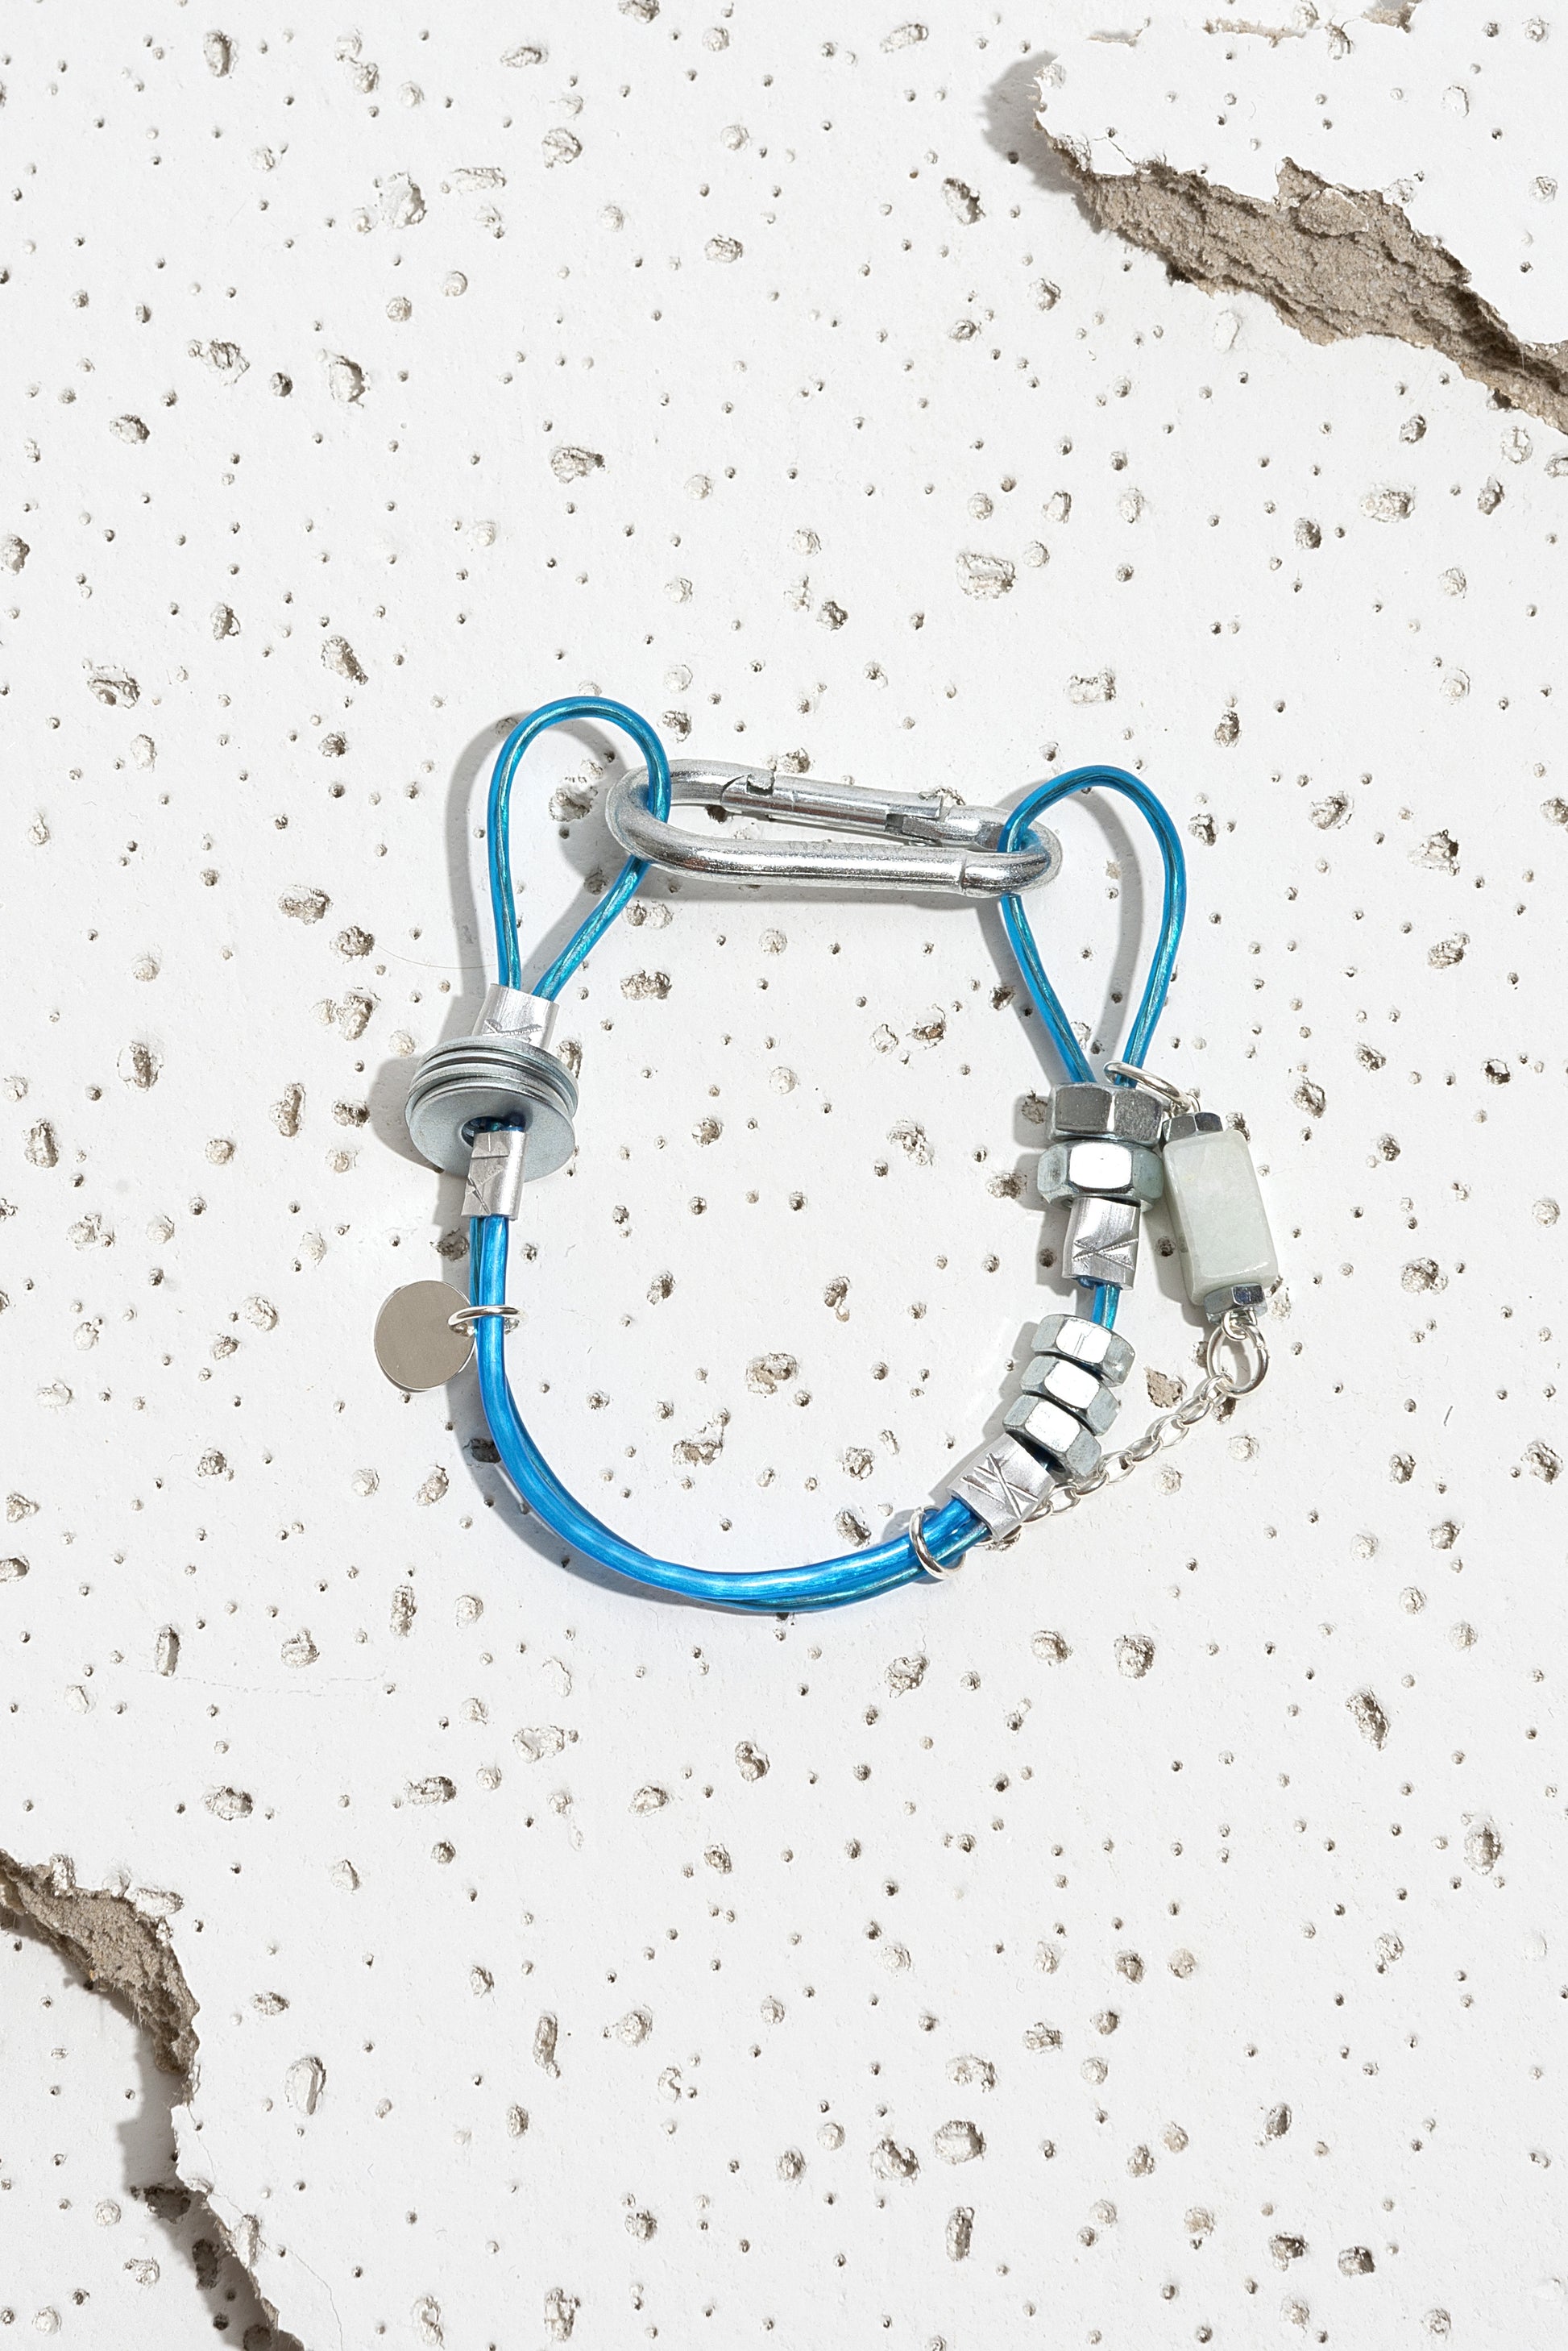 contemporary jewelry bracelet with Amazonite stone